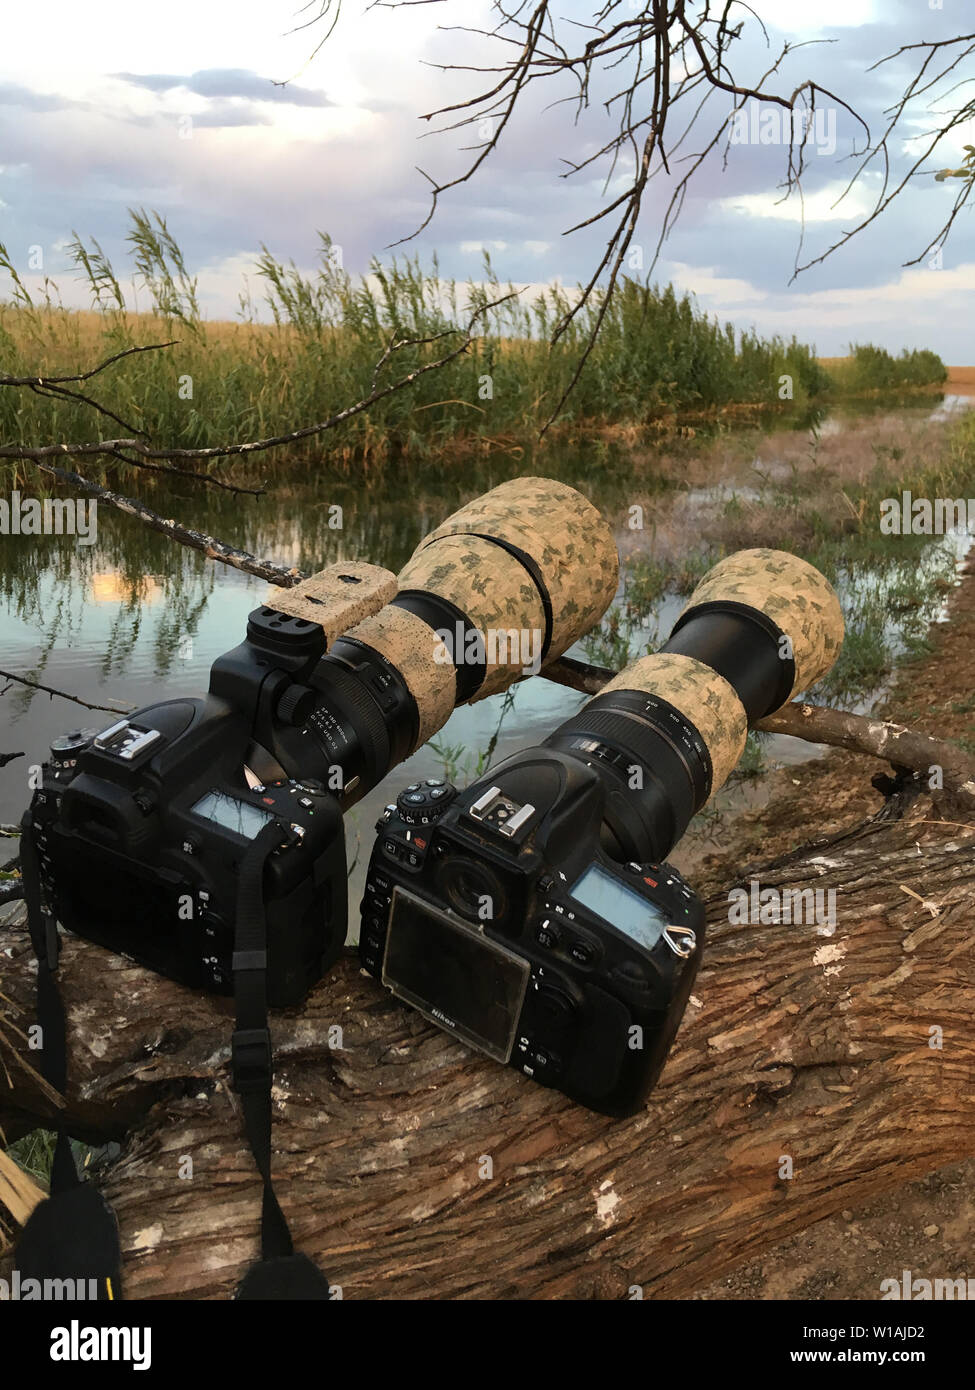 Camera Nikon D800 and Nikon D750, lens Tamron 150-600 g1 and g2 in Kalmykia  Камера Никон Д750 и Д800 и объектив Тамрон 150-600 на съёмке дикой природы  Stock Photo - Alamy